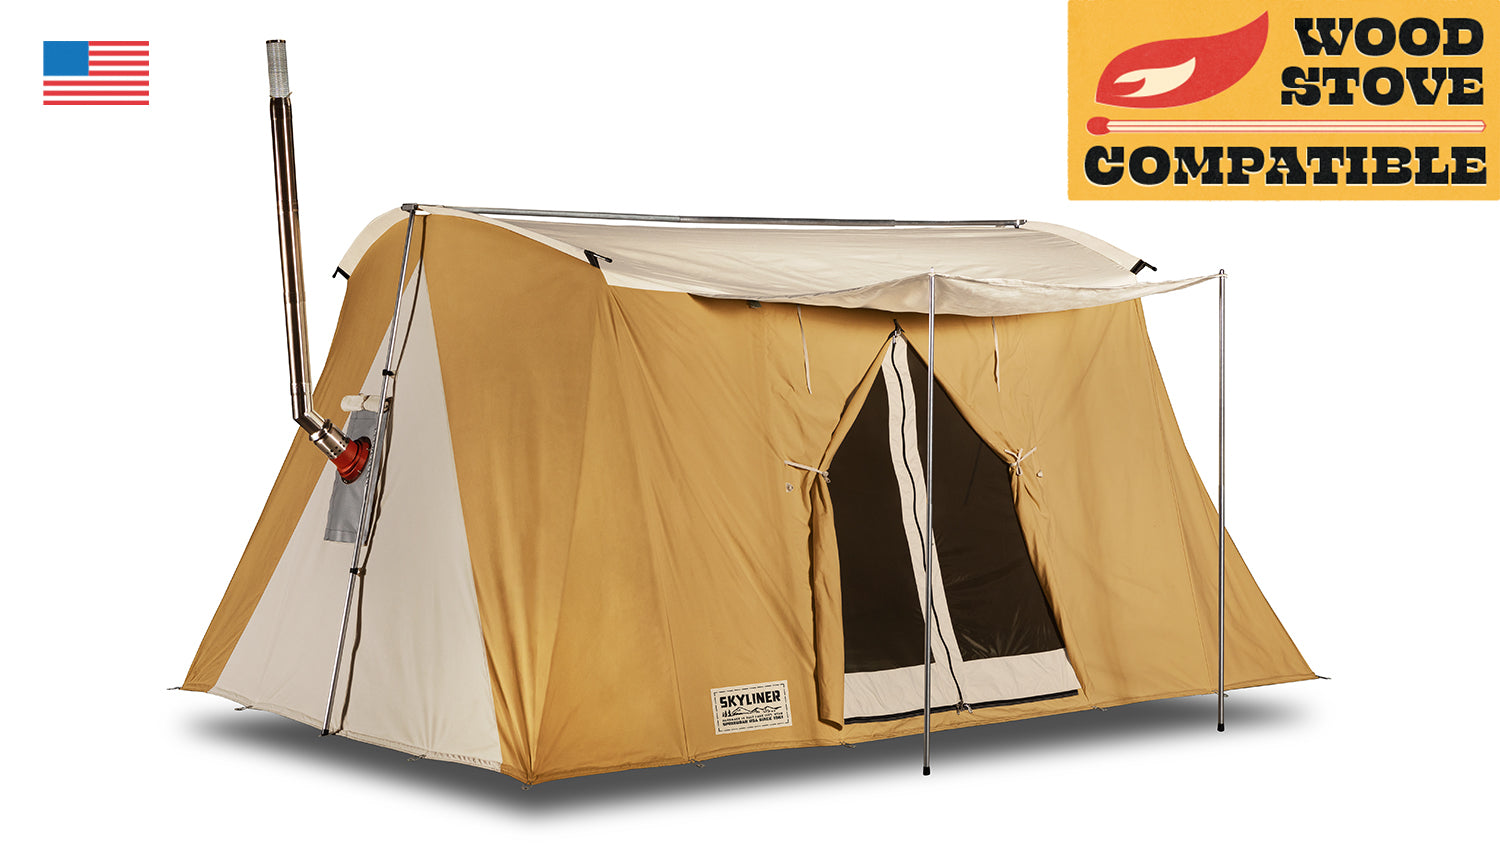 Springbar Skyliner Canvas Hot Tent